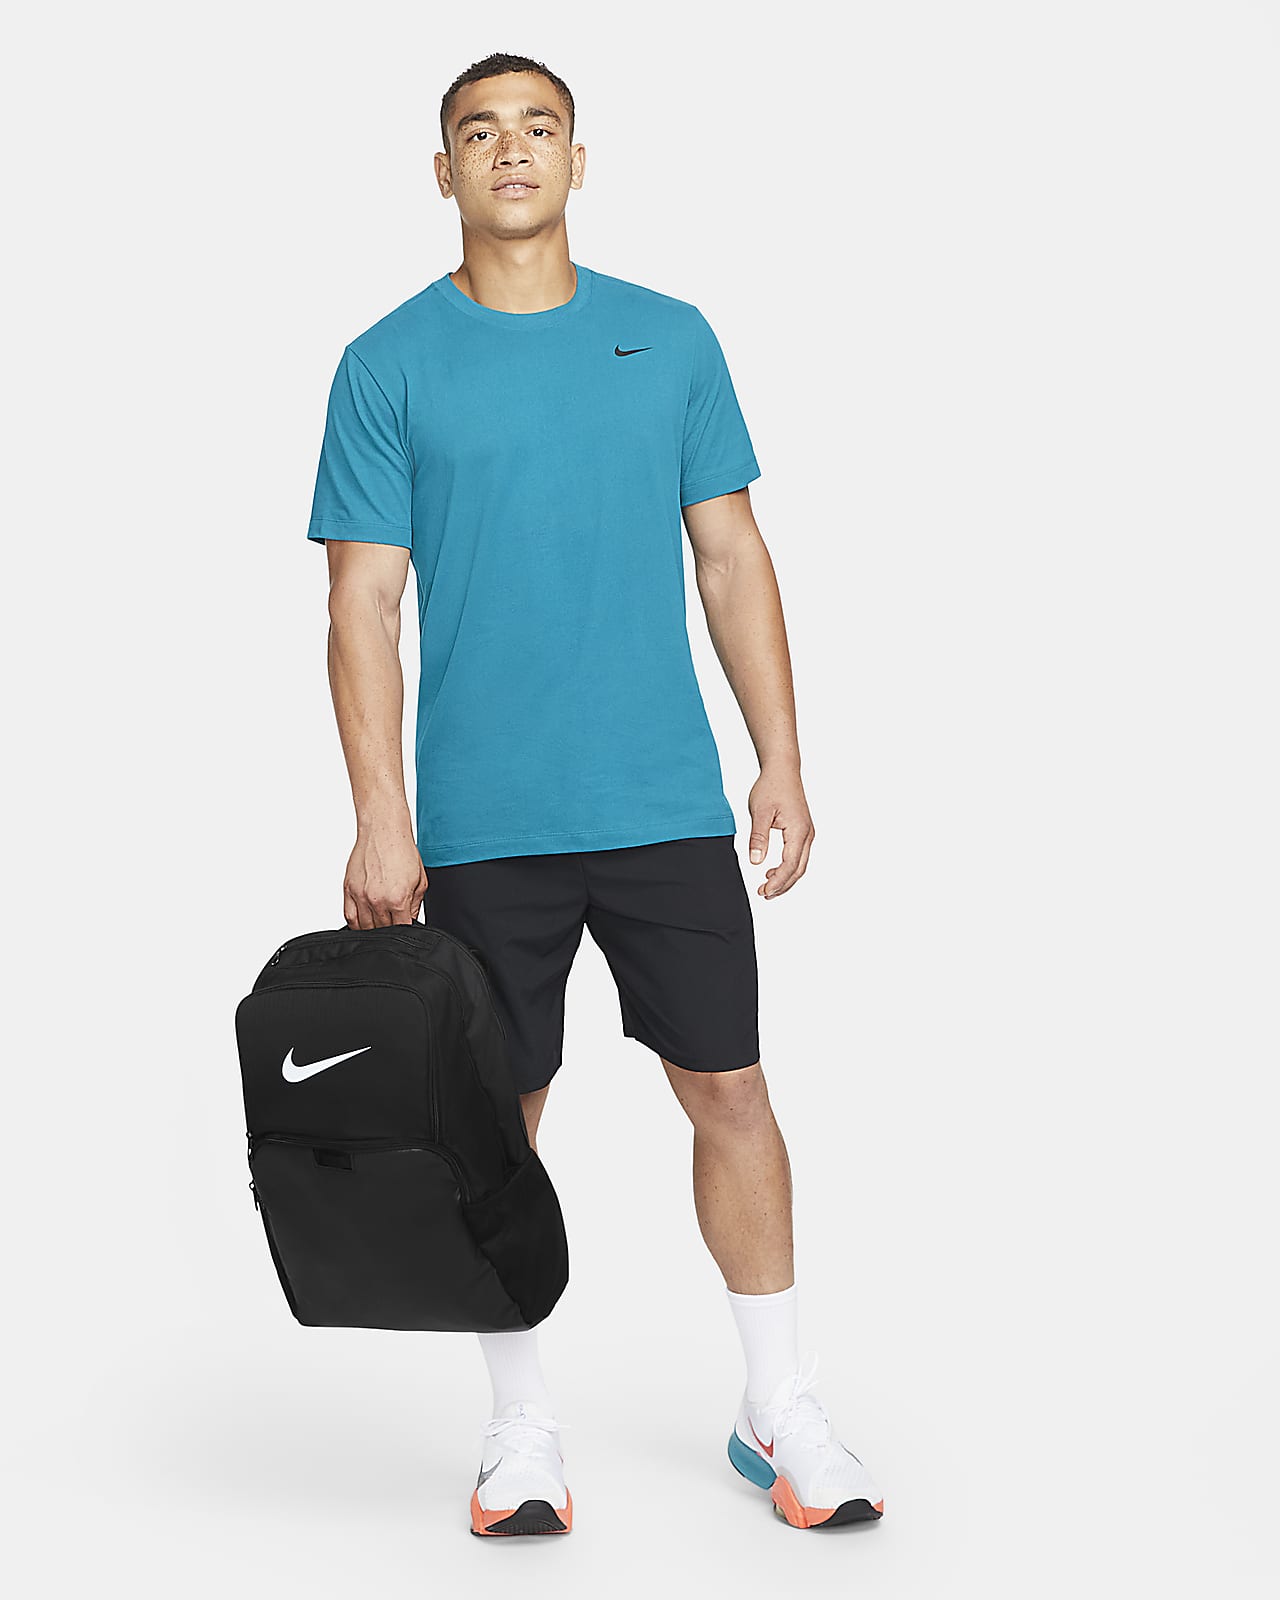 Mochila Nike Brasilia XL Unissex - Nike